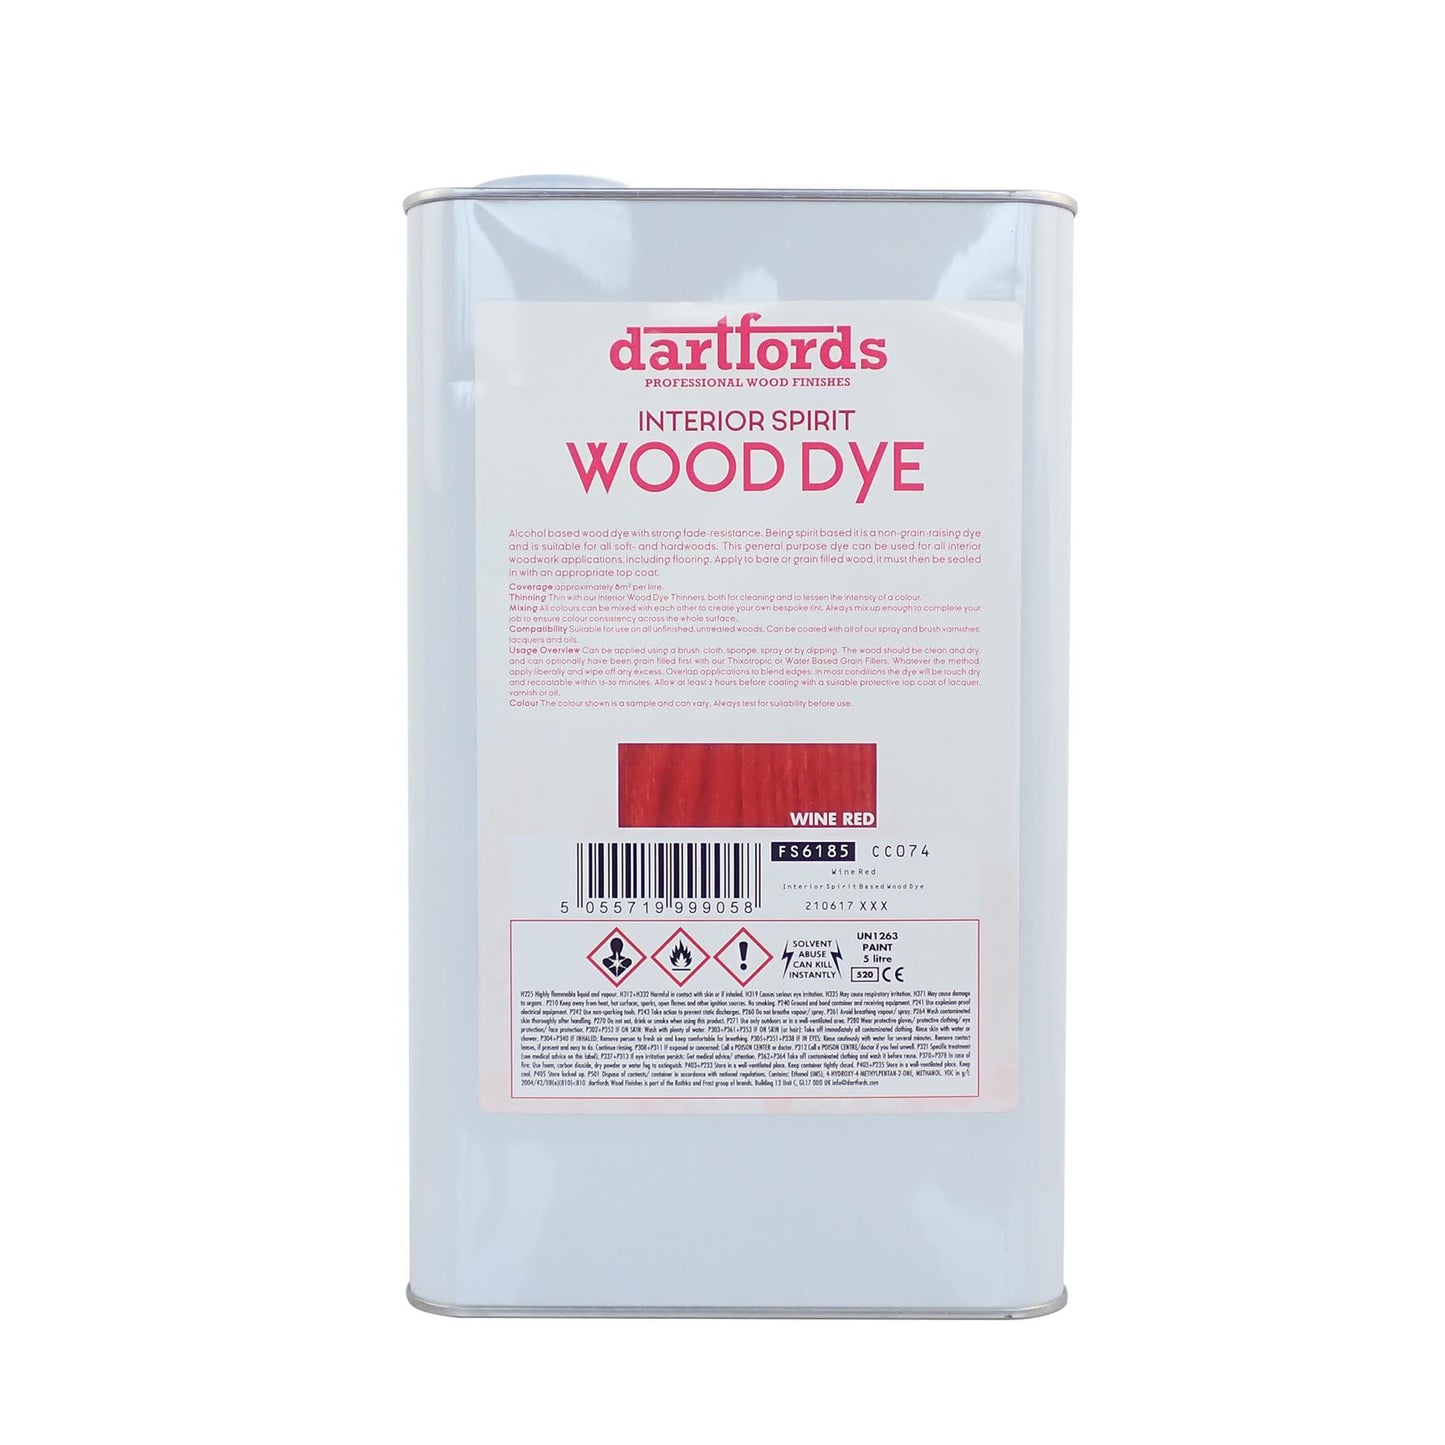 dartfords Wine Red Interior Spirit Based Wood Dye - 5 litre Jerrycan